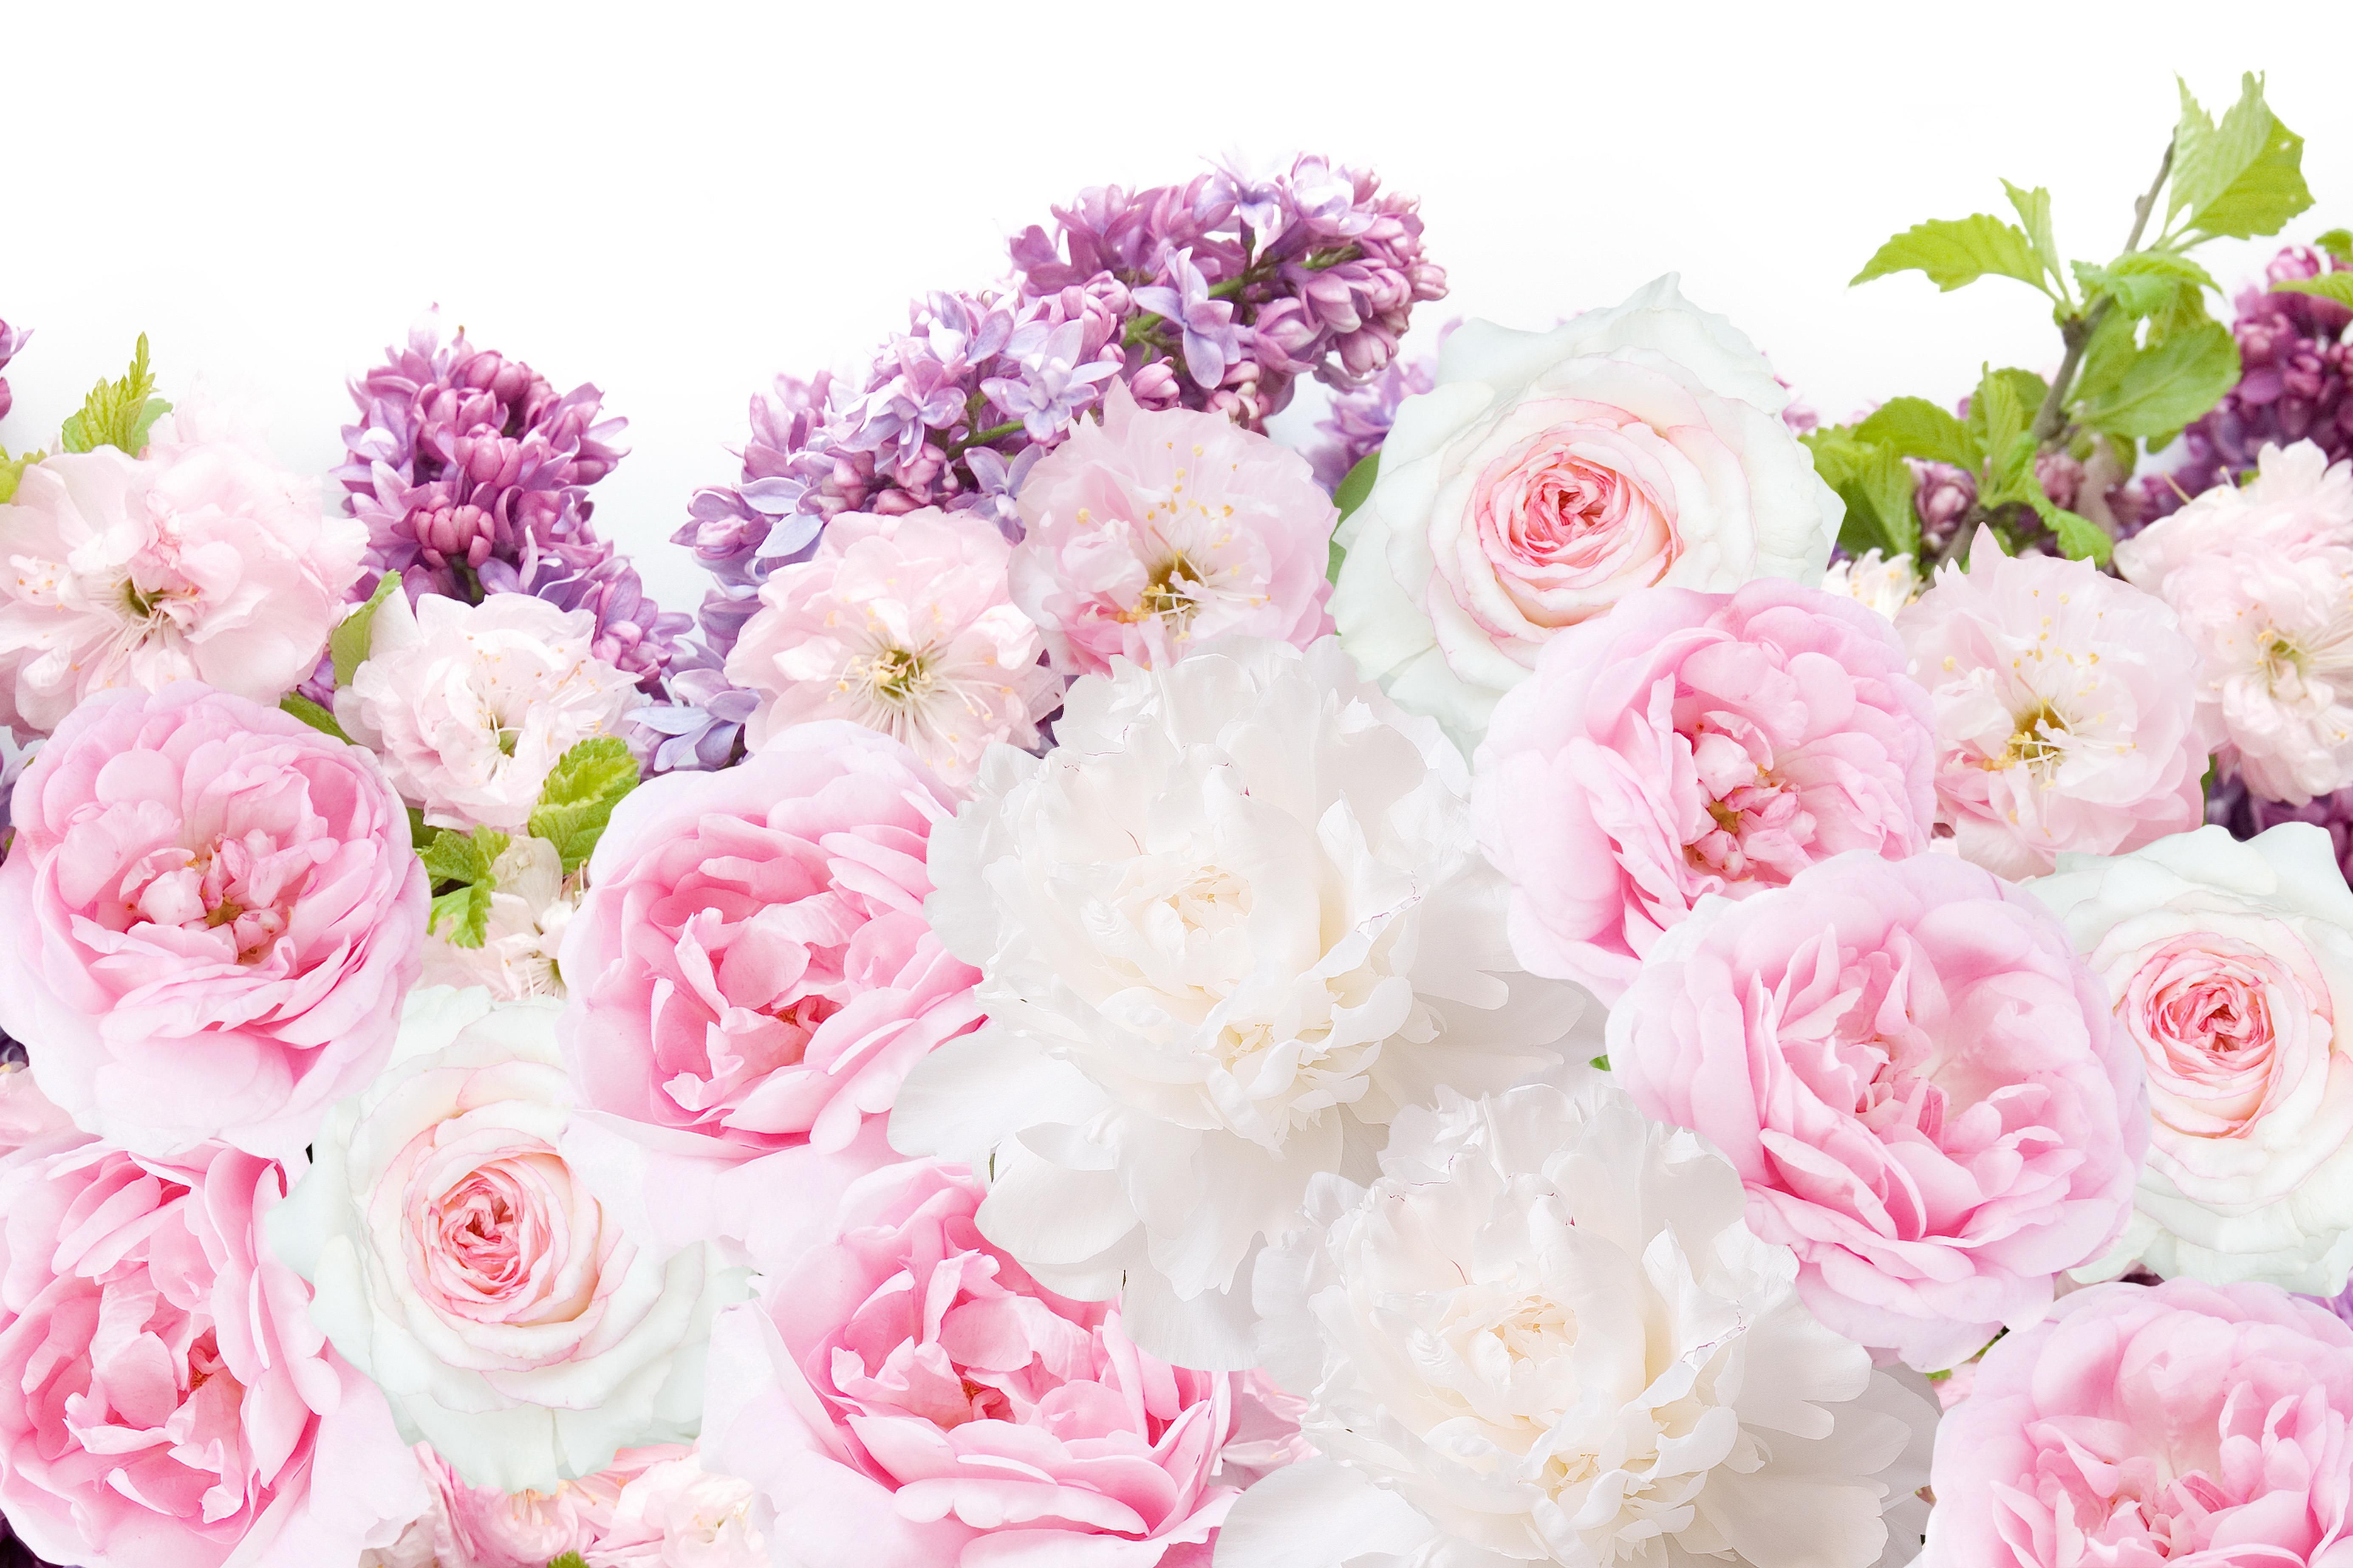 carta da parati rosa e bianca,fiore,pianta fiorita,rose da giardino,rosa,rosa centifolia